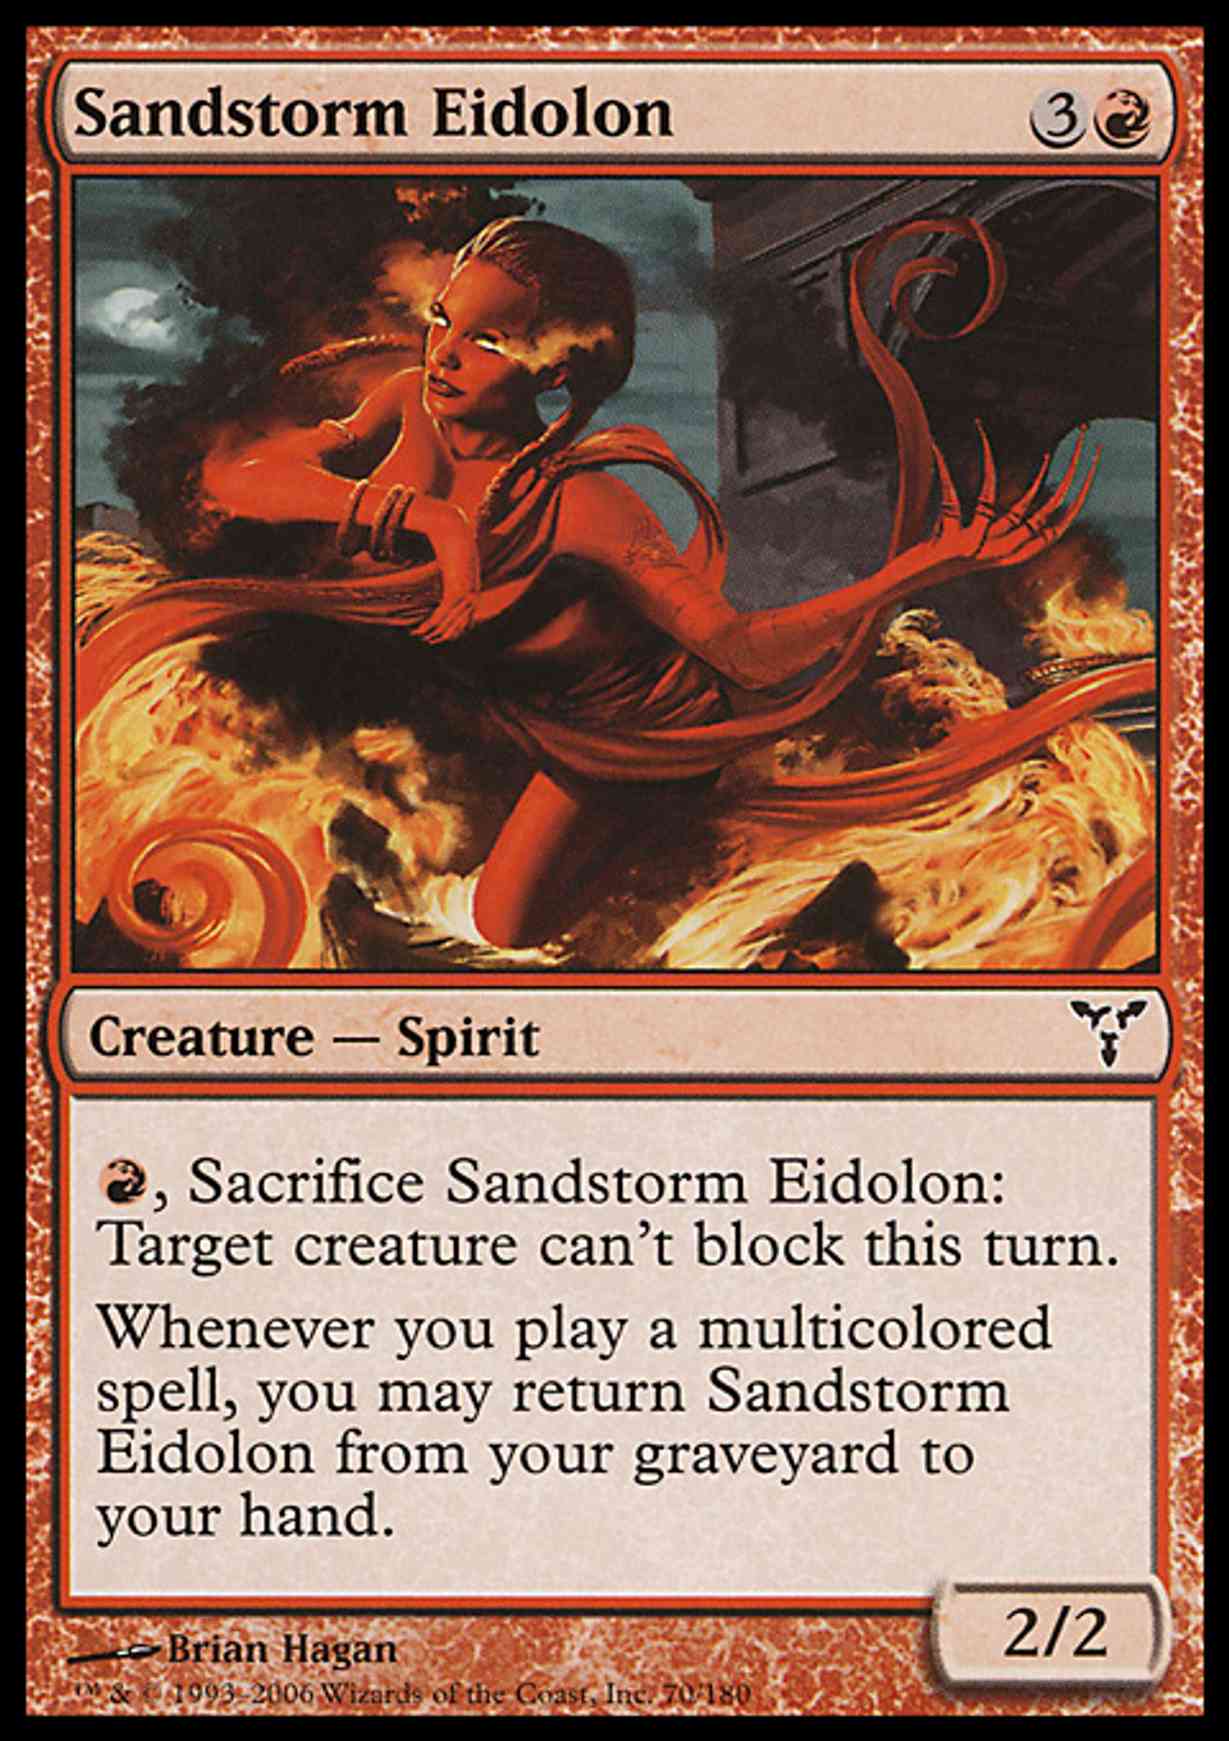 Sandstorm Eidolon magic card front